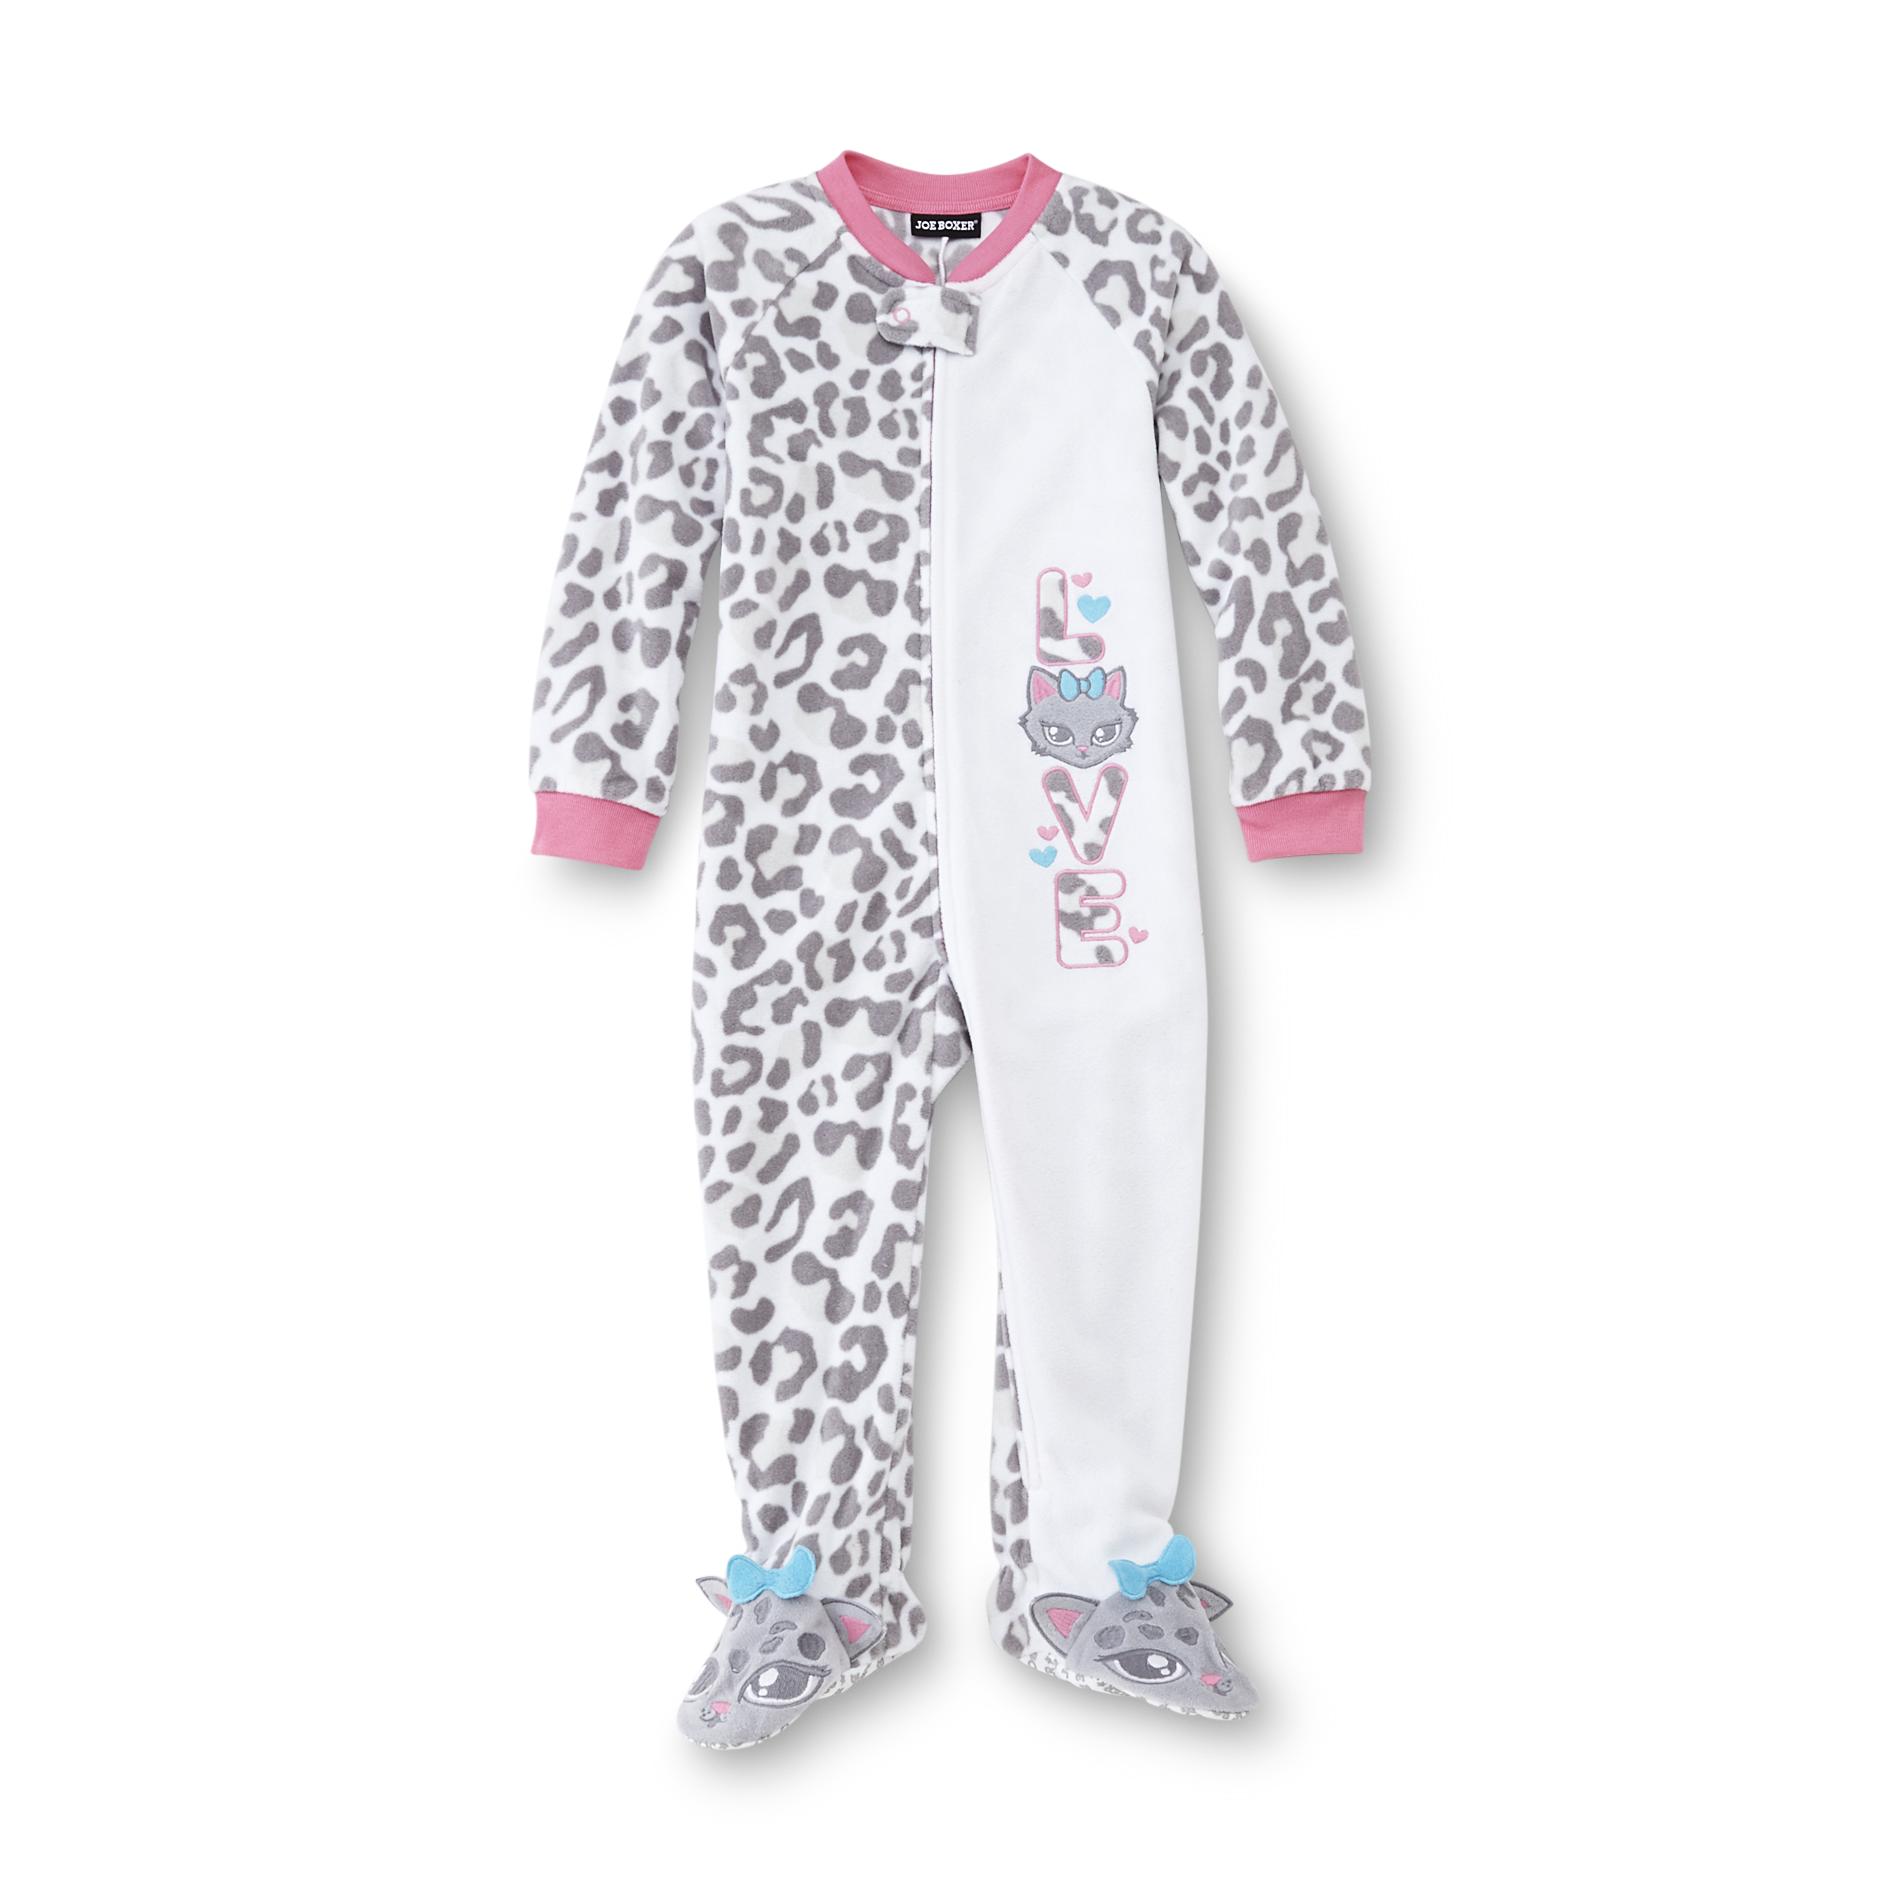 Joe Boxer Infant & Toddler Girl's Footed Blanket Sleeper Pajamas - Kitty